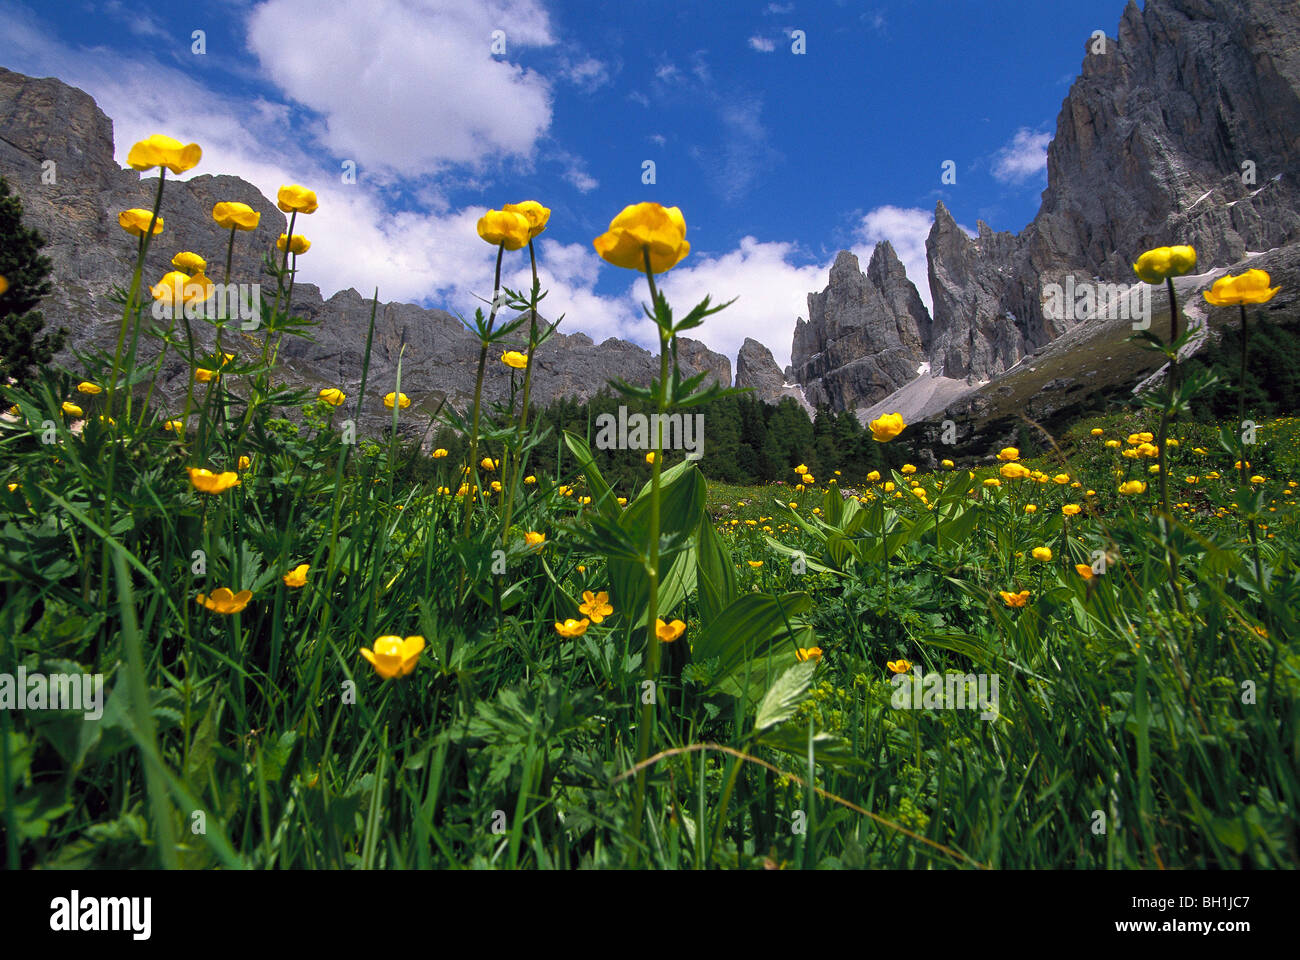 Meadow full of globe flowers, Rosengarten Group, Dolomites, South Tyrol, Italy Stock Photo